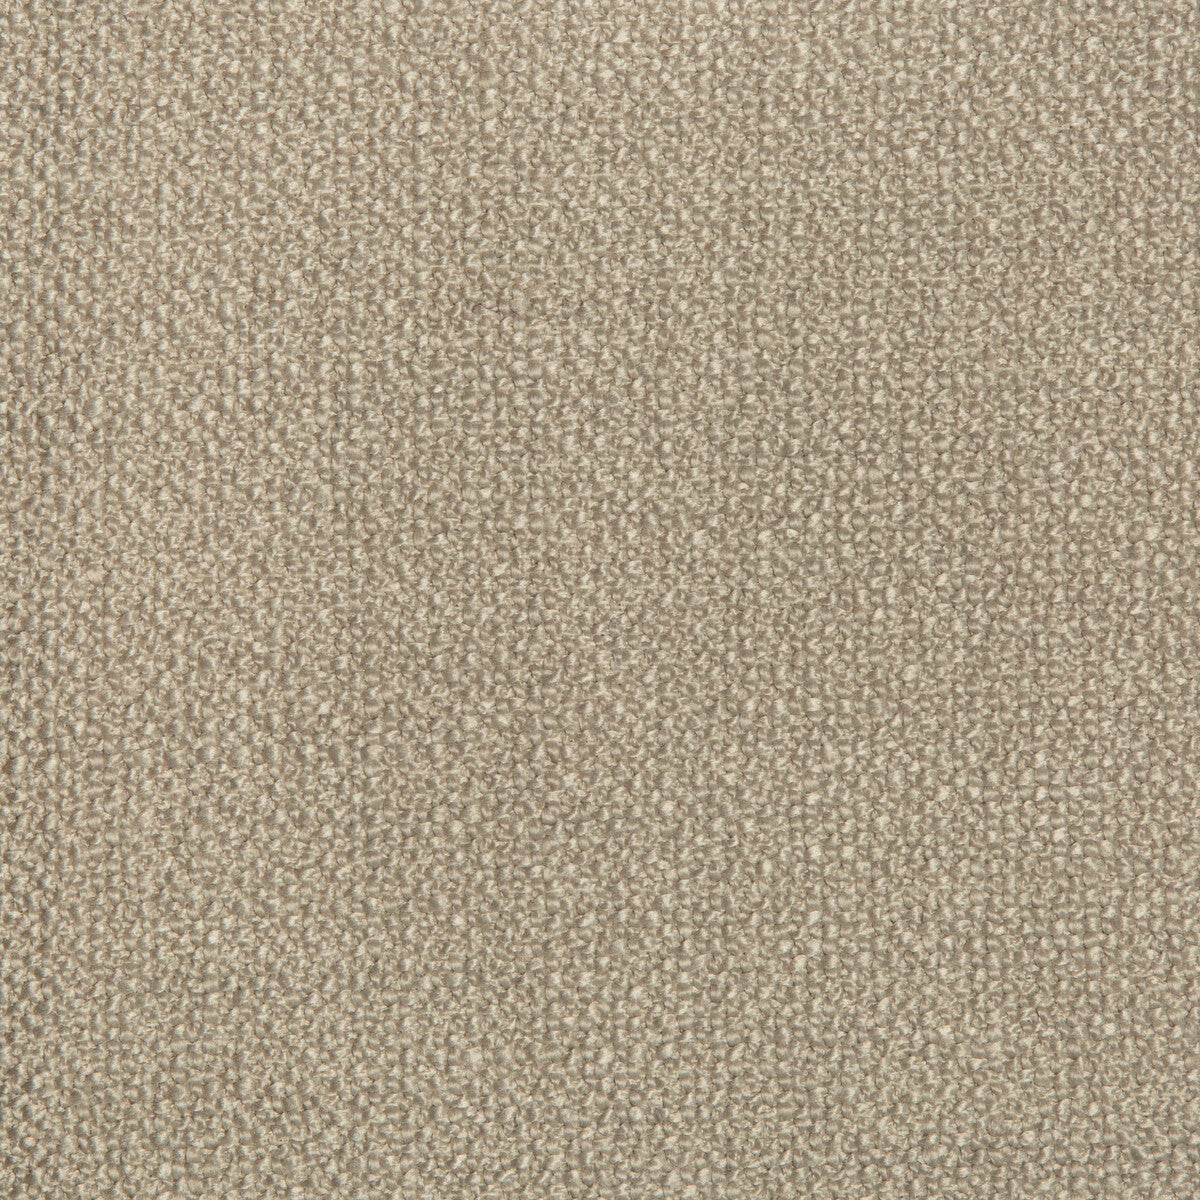 Kravet Smart fabric in 35379-16 color - pattern 35379.16.0 - by Kravet Smart in the Performance Kravetarmor collection